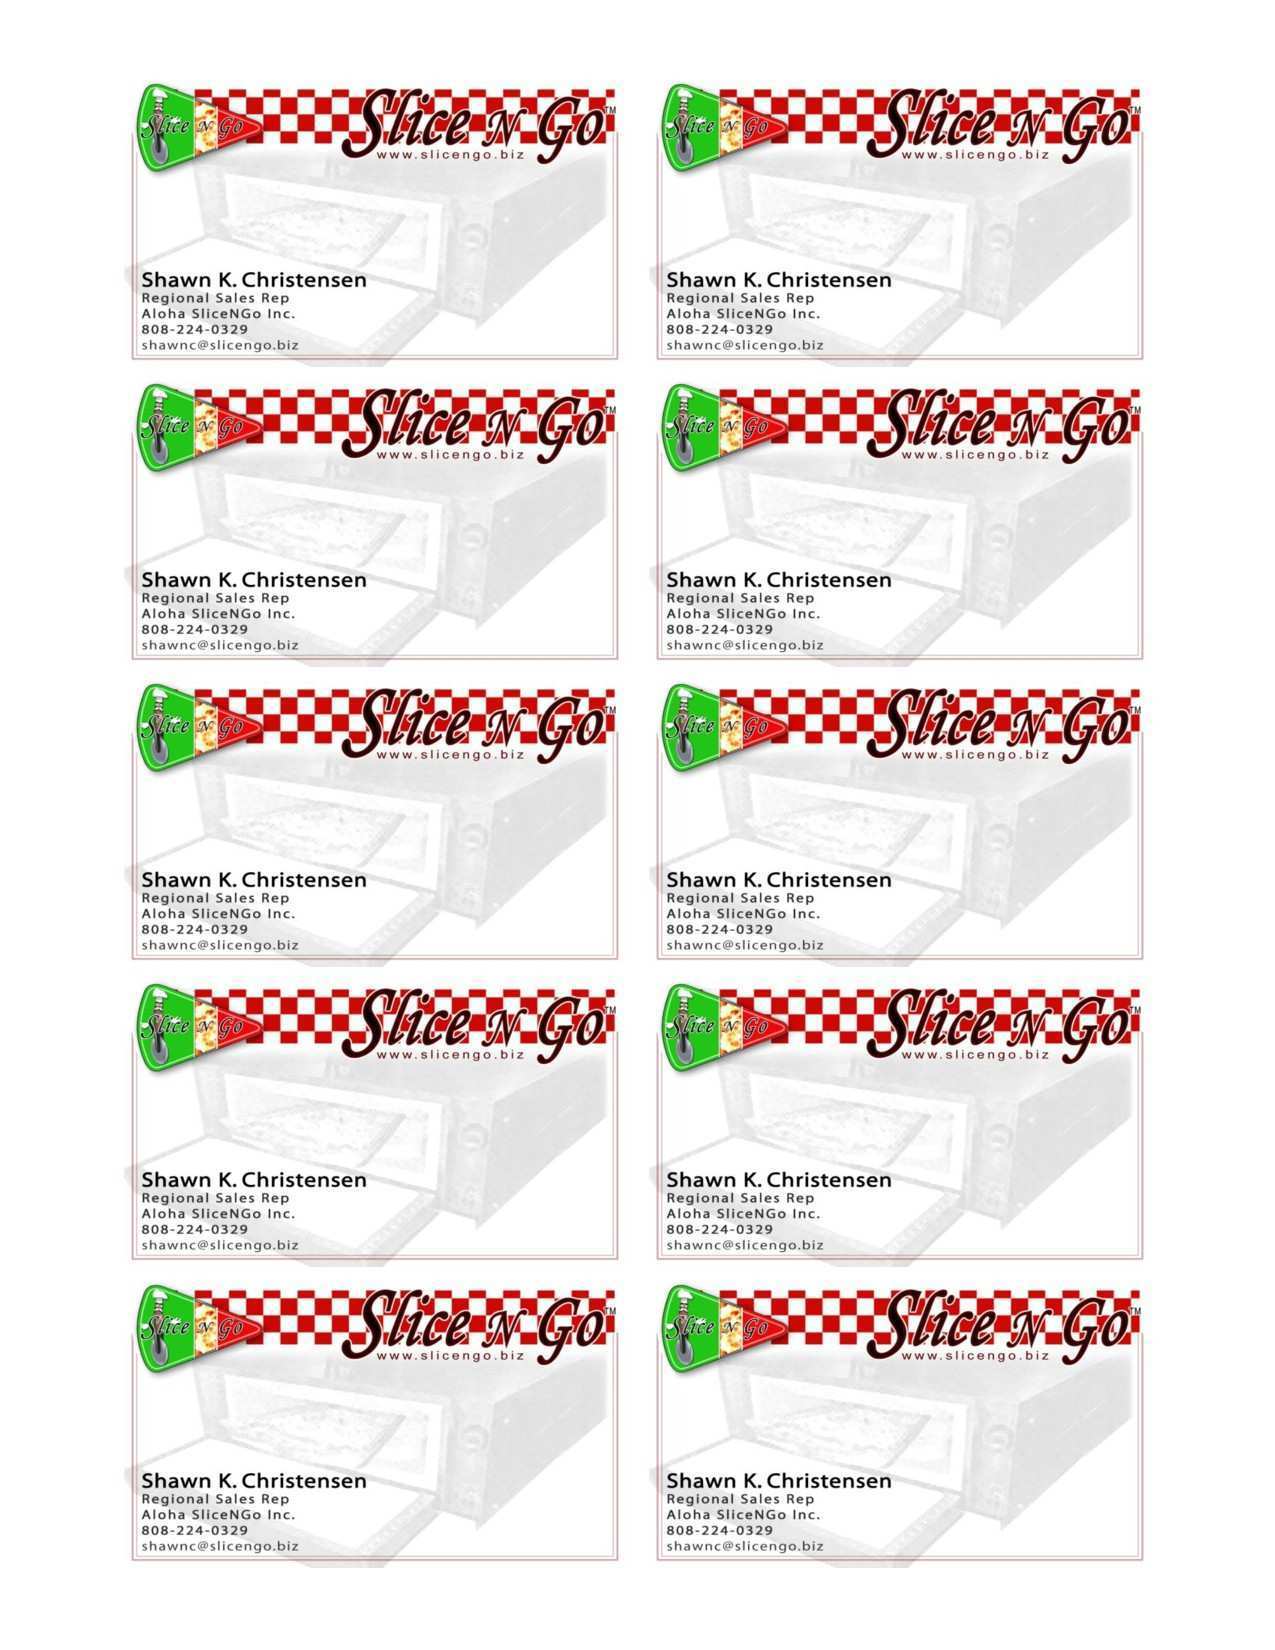 Microsoft Word 4 X 6 Postcard Template 2 014 Free Blank Business Card